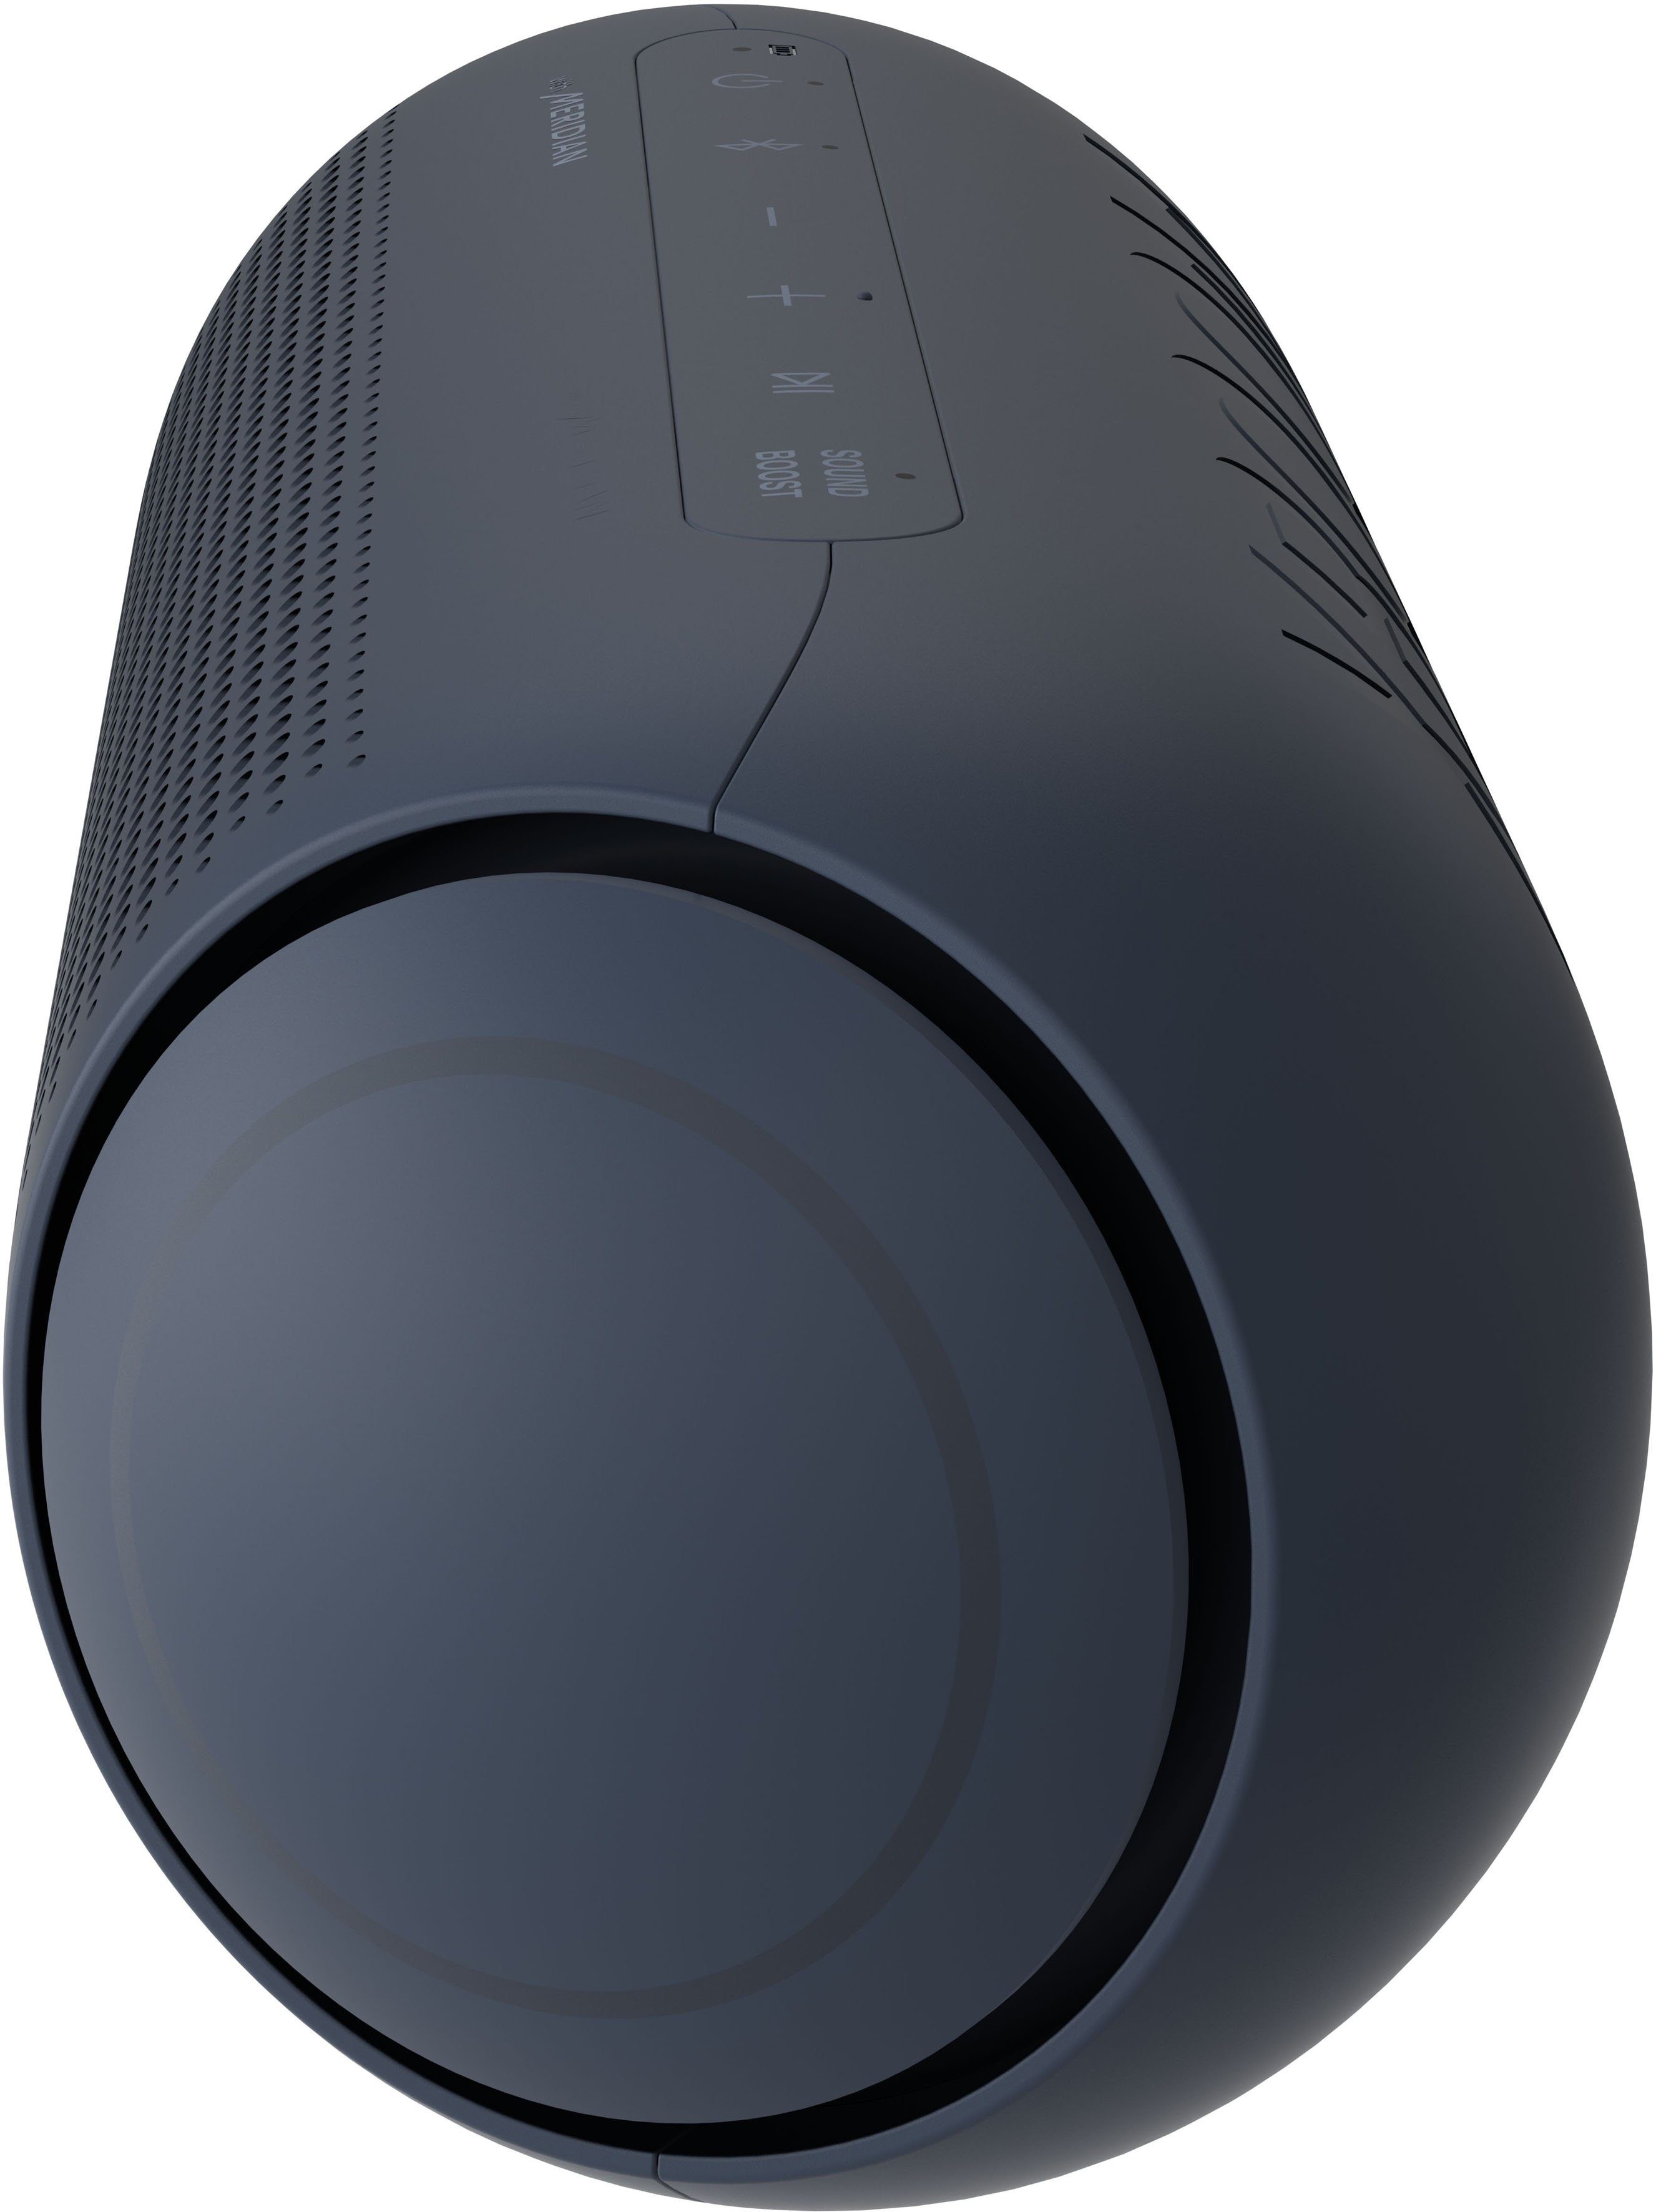 LG XBOOM Go PL5 Stereo Bluetooth-Lautsprecher (Bluetooth, Multipoint-Anbindung)